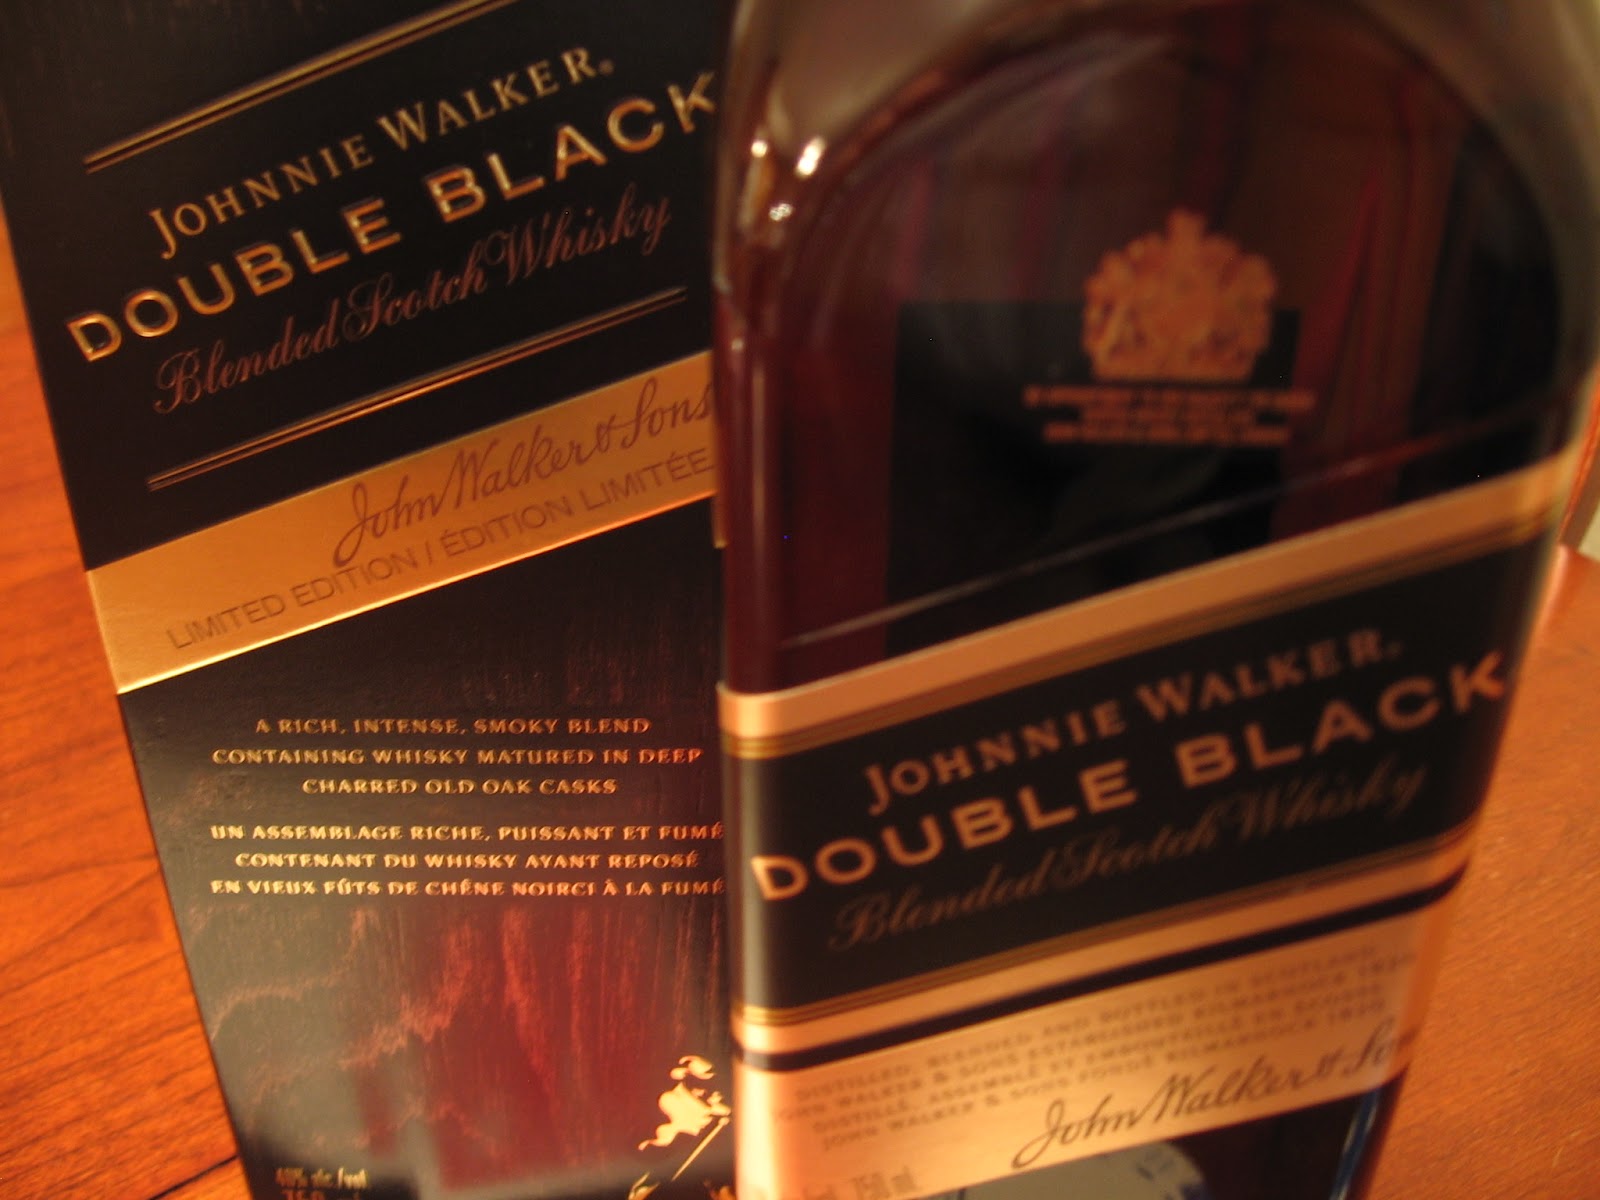 Double Black Label Vs Jack Daniels